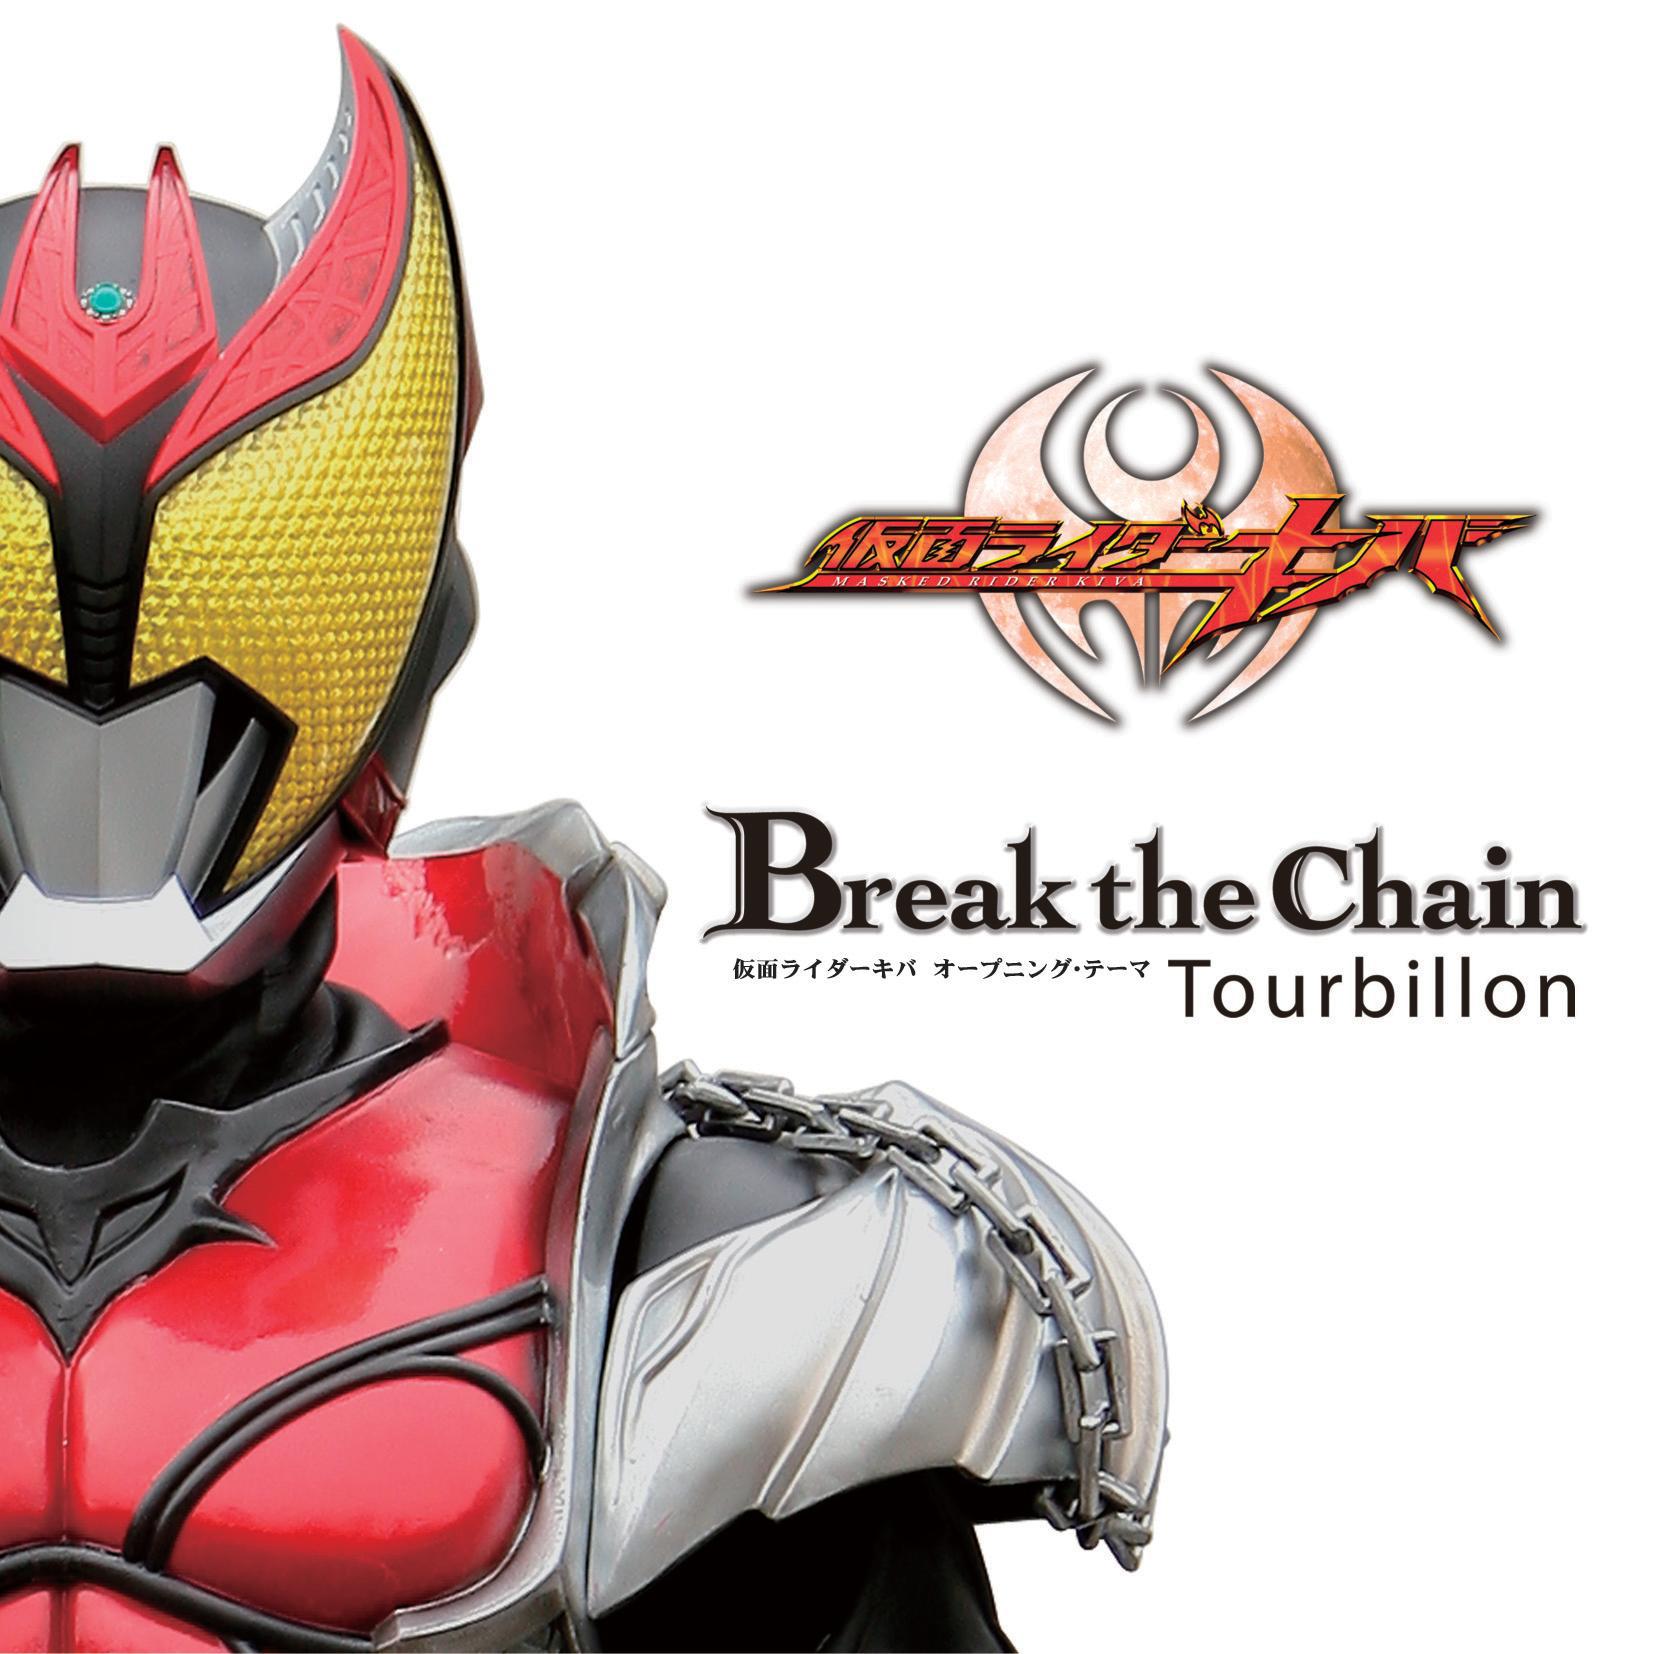 Tourbillon - Break the Chain (TV size edit)